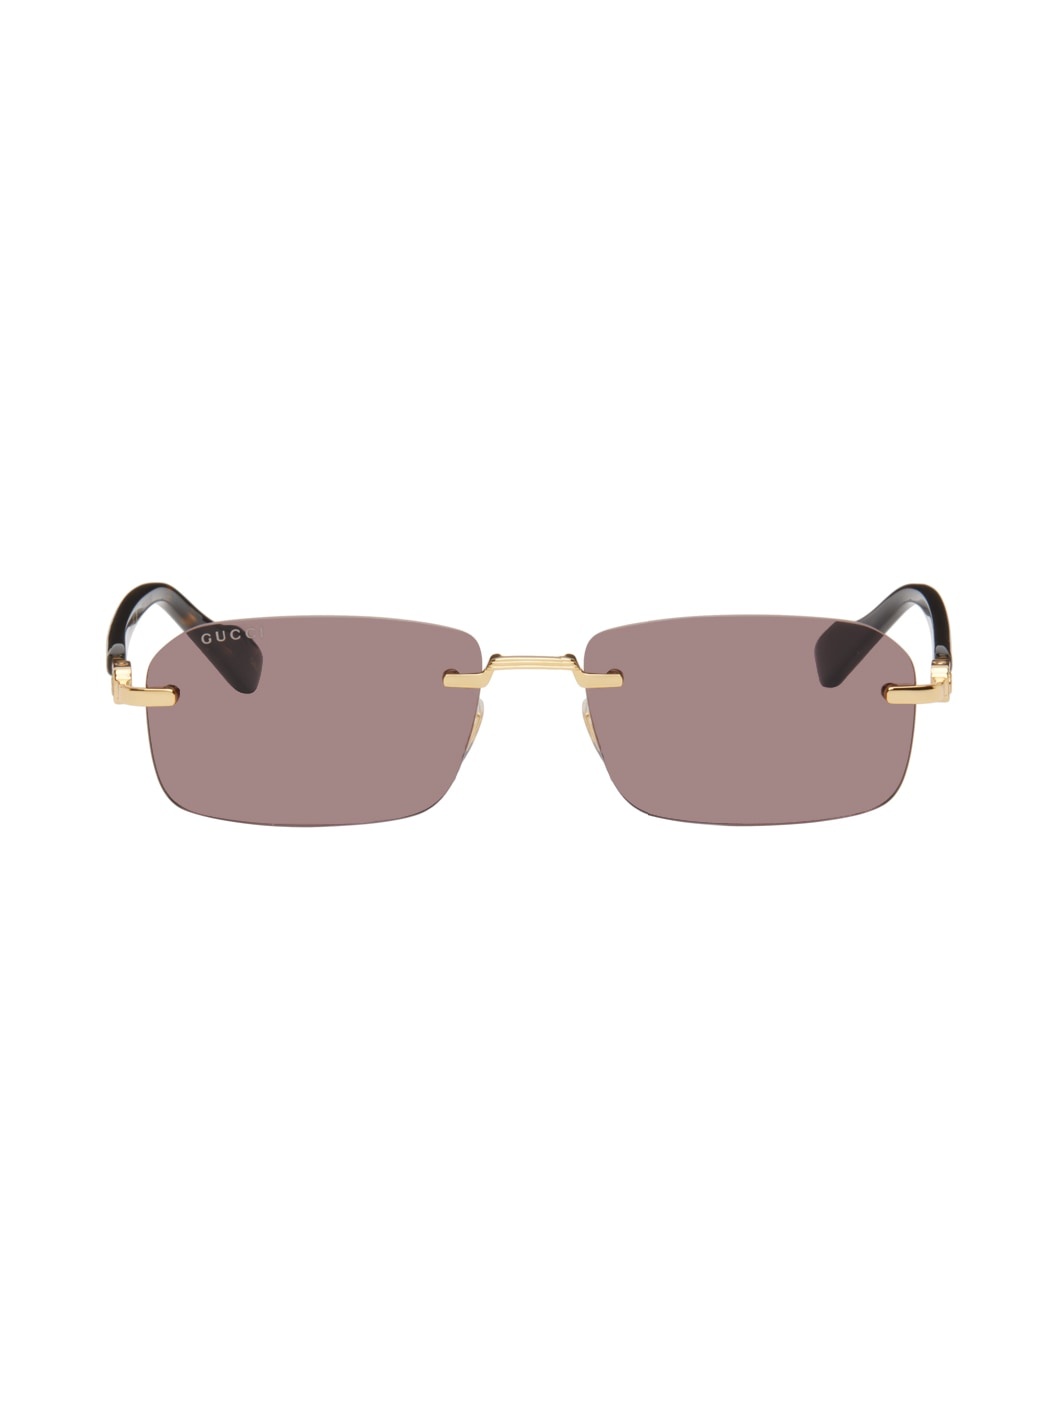 Gold & Tortoiseshell Rectangular Sunglasses - 1